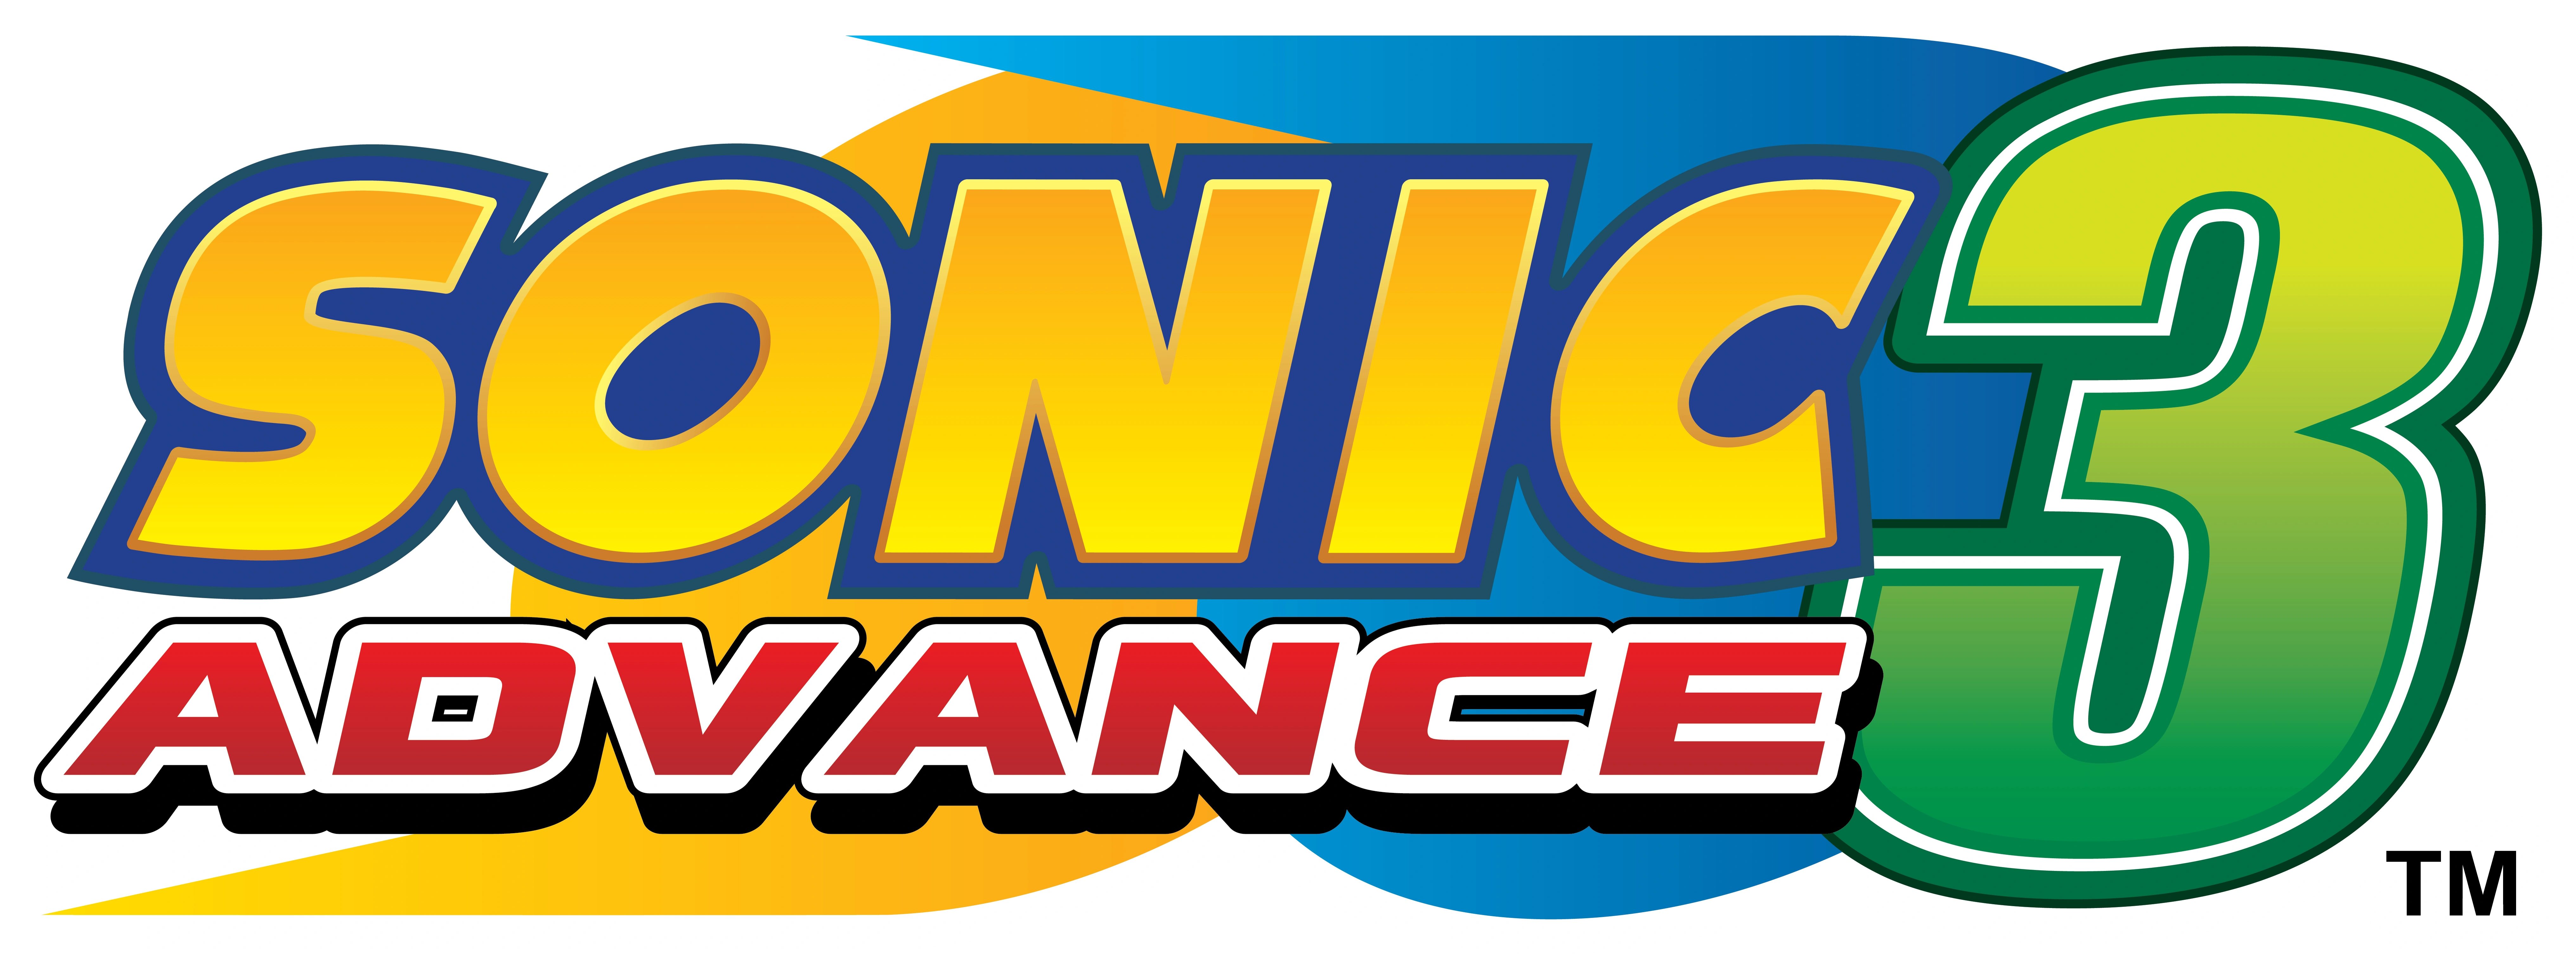 Sonic Advance 3 Logo